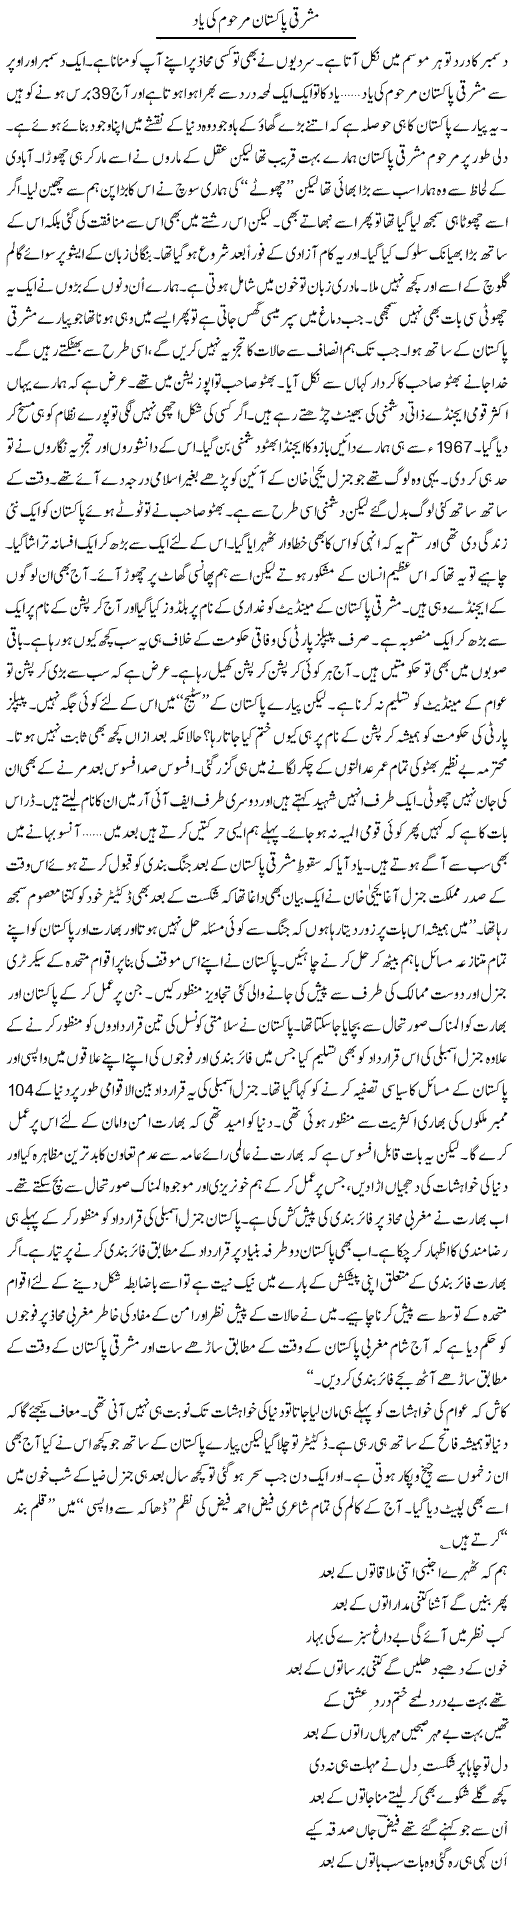 East Pakistan Express Column Ijaz Hafeez 21 December 2010